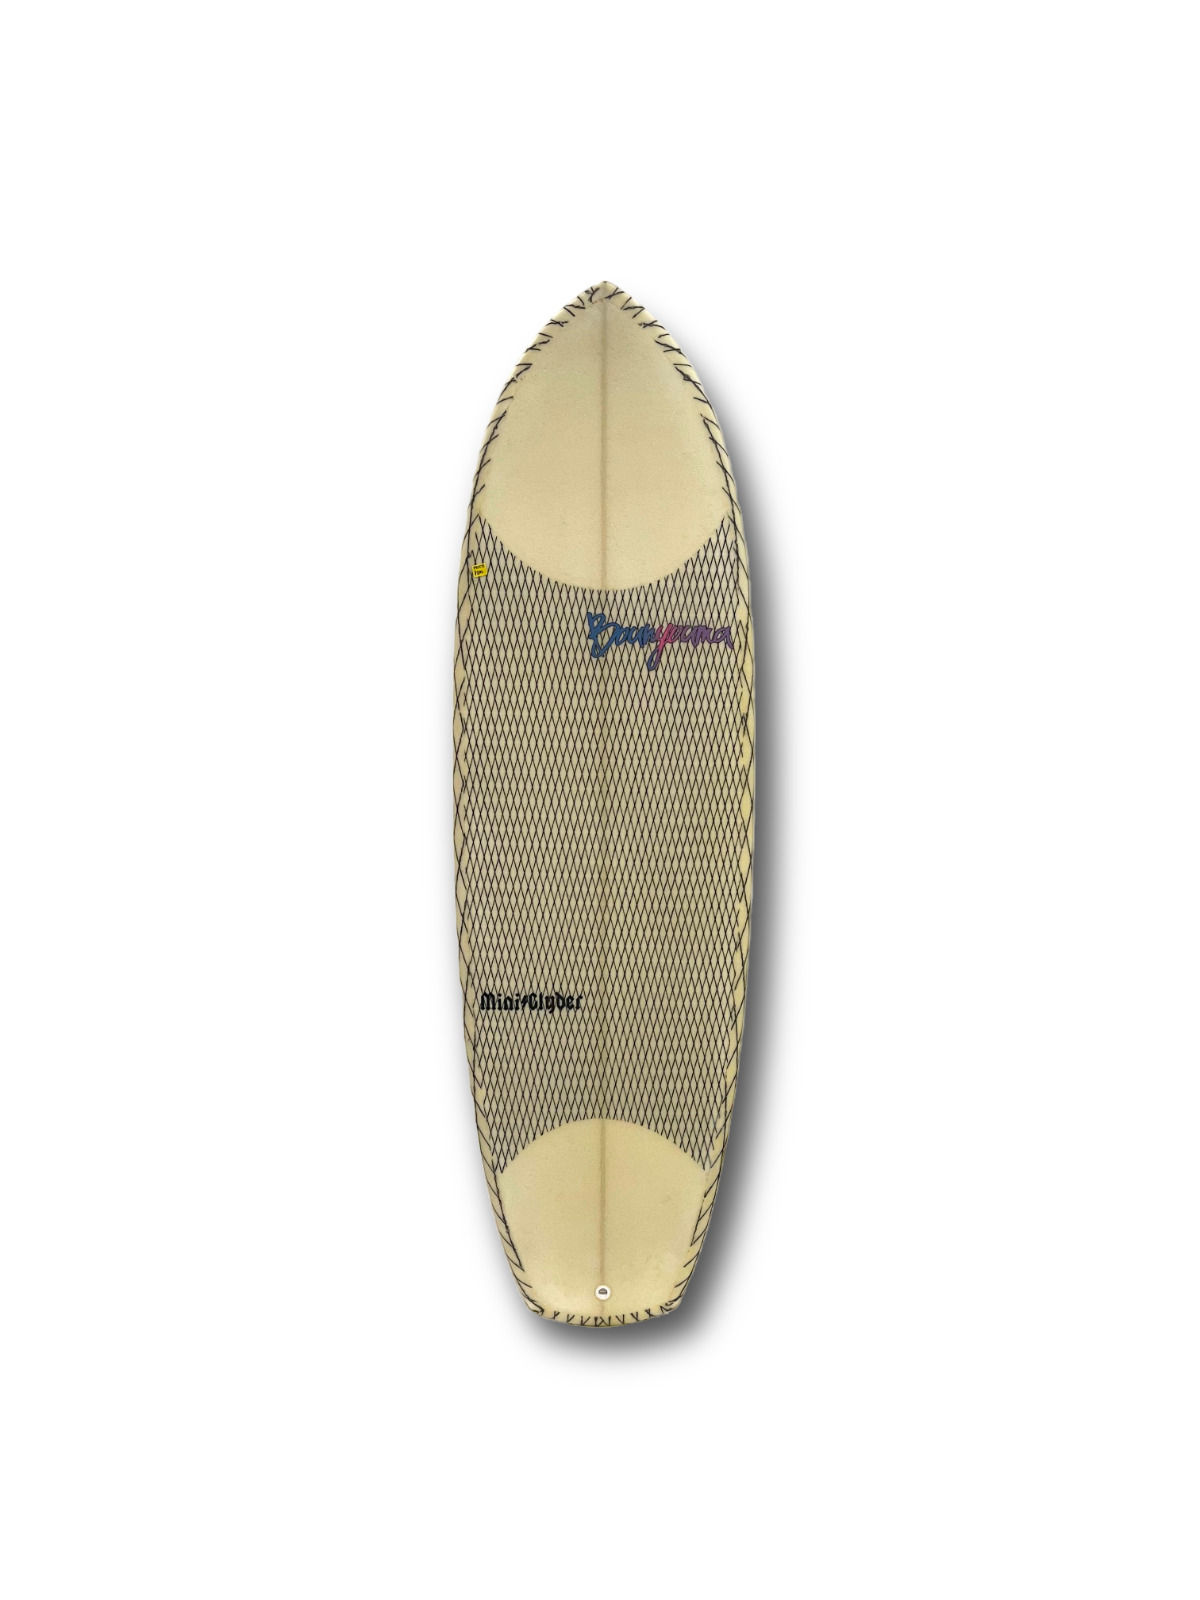 5'9" x 2.86" x 2.65"  Groveler Performance Shortboard Surfboard M21 Sports